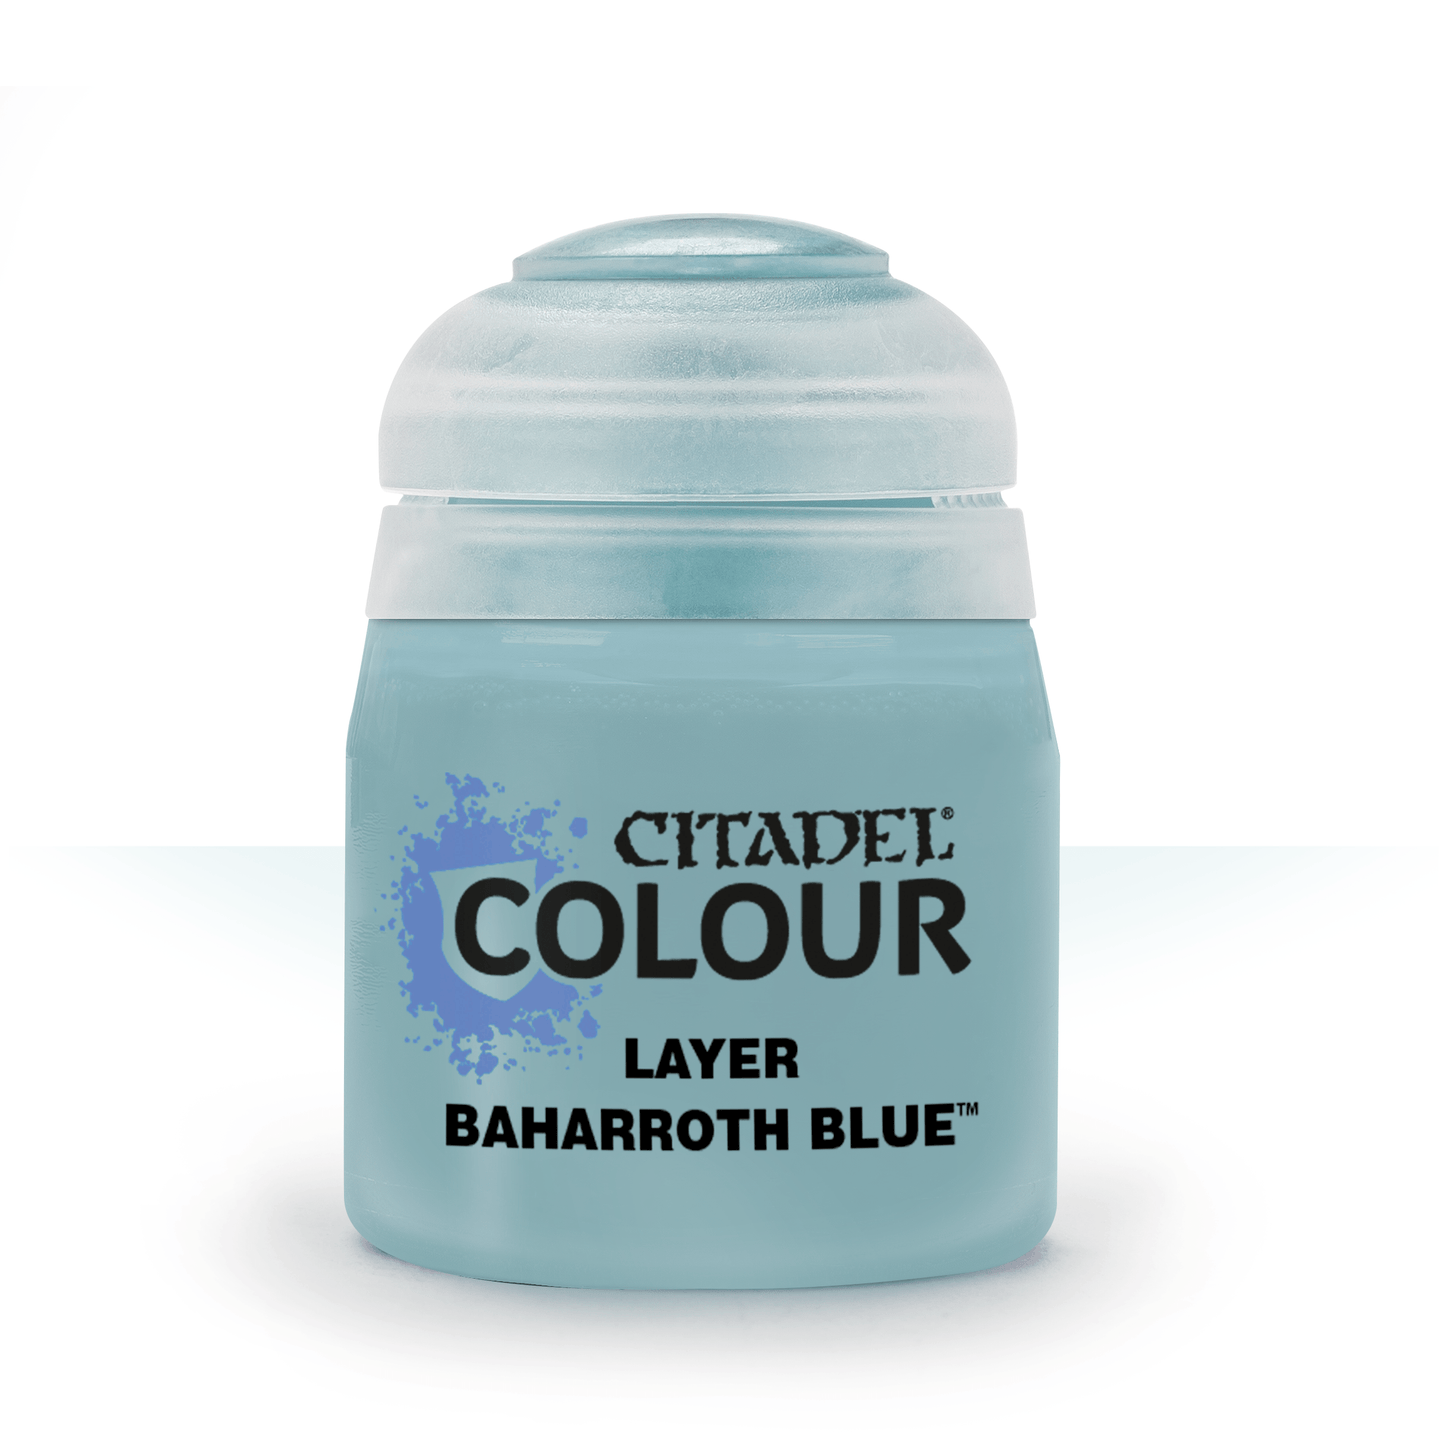 Layer: Baharroth Blue